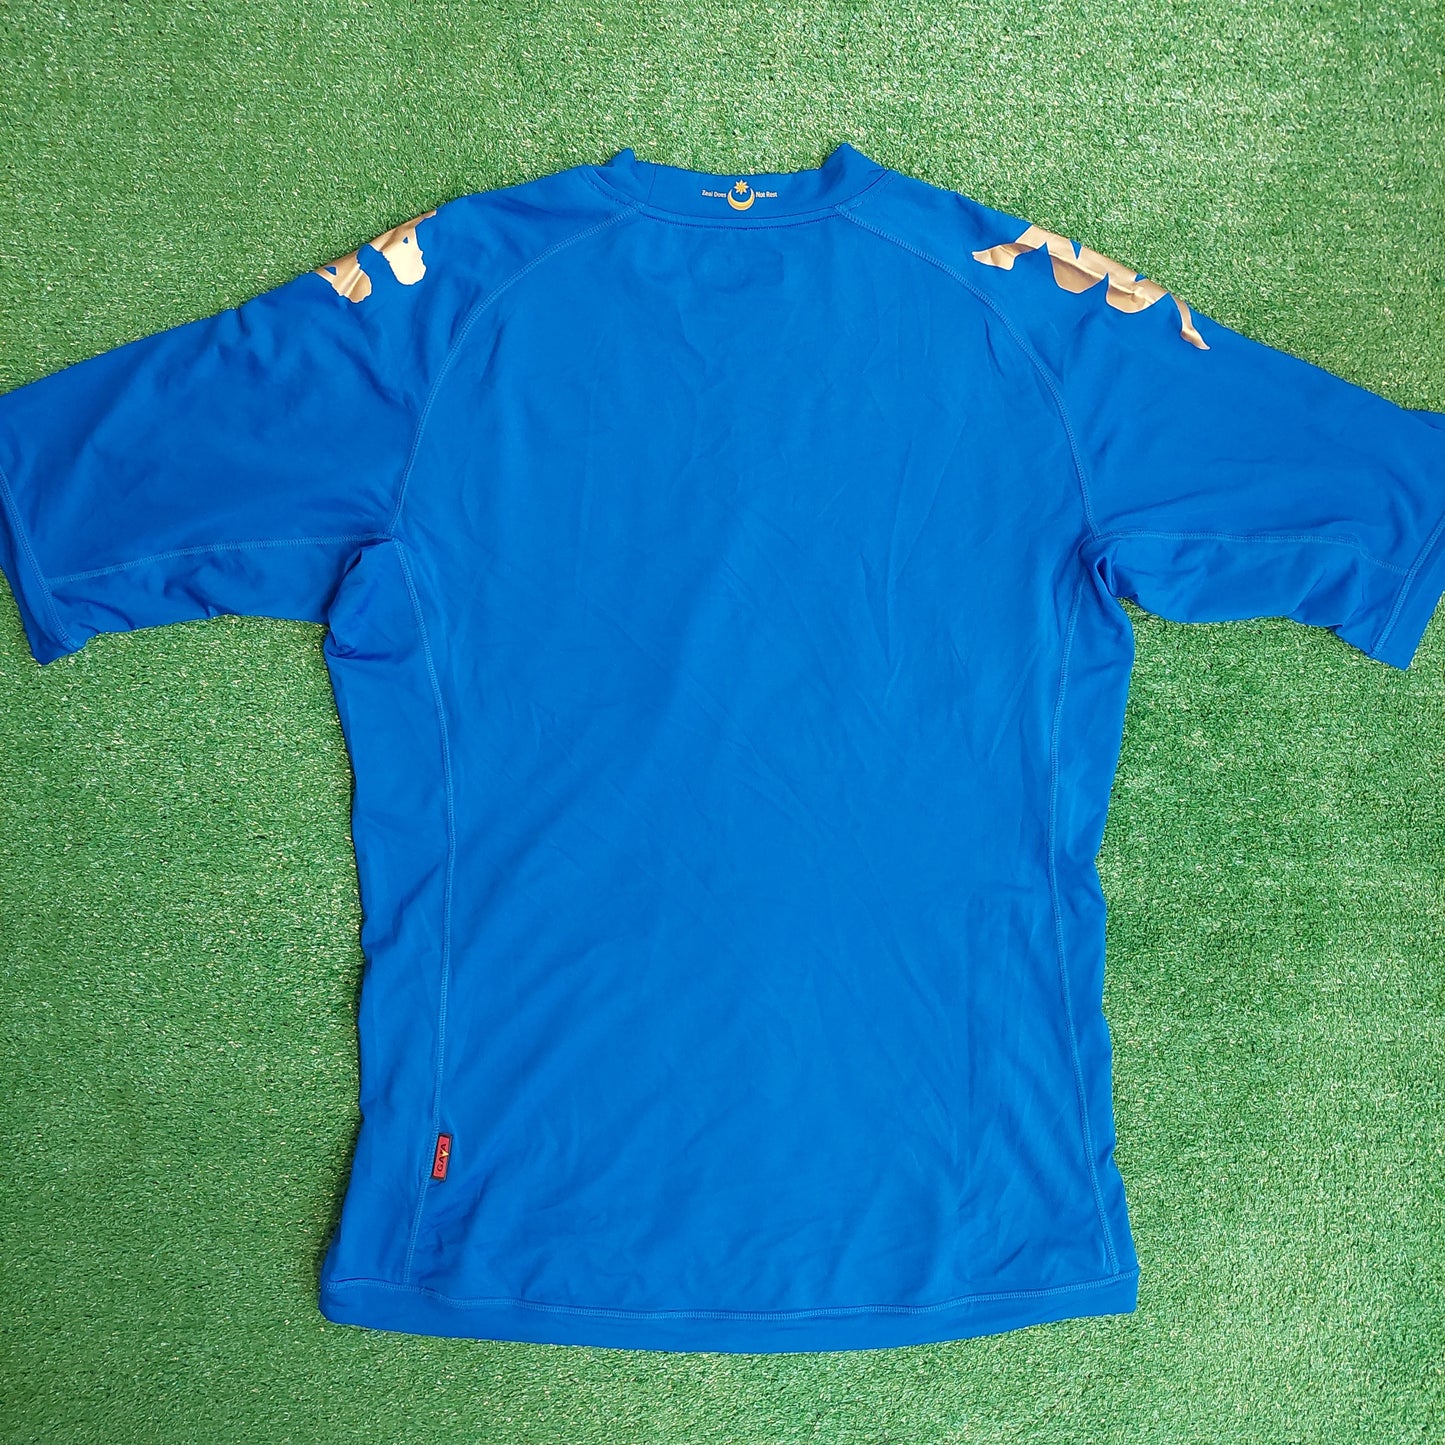 Portsmouth 2011/12 Home Shirt (Excellent) - Size XL